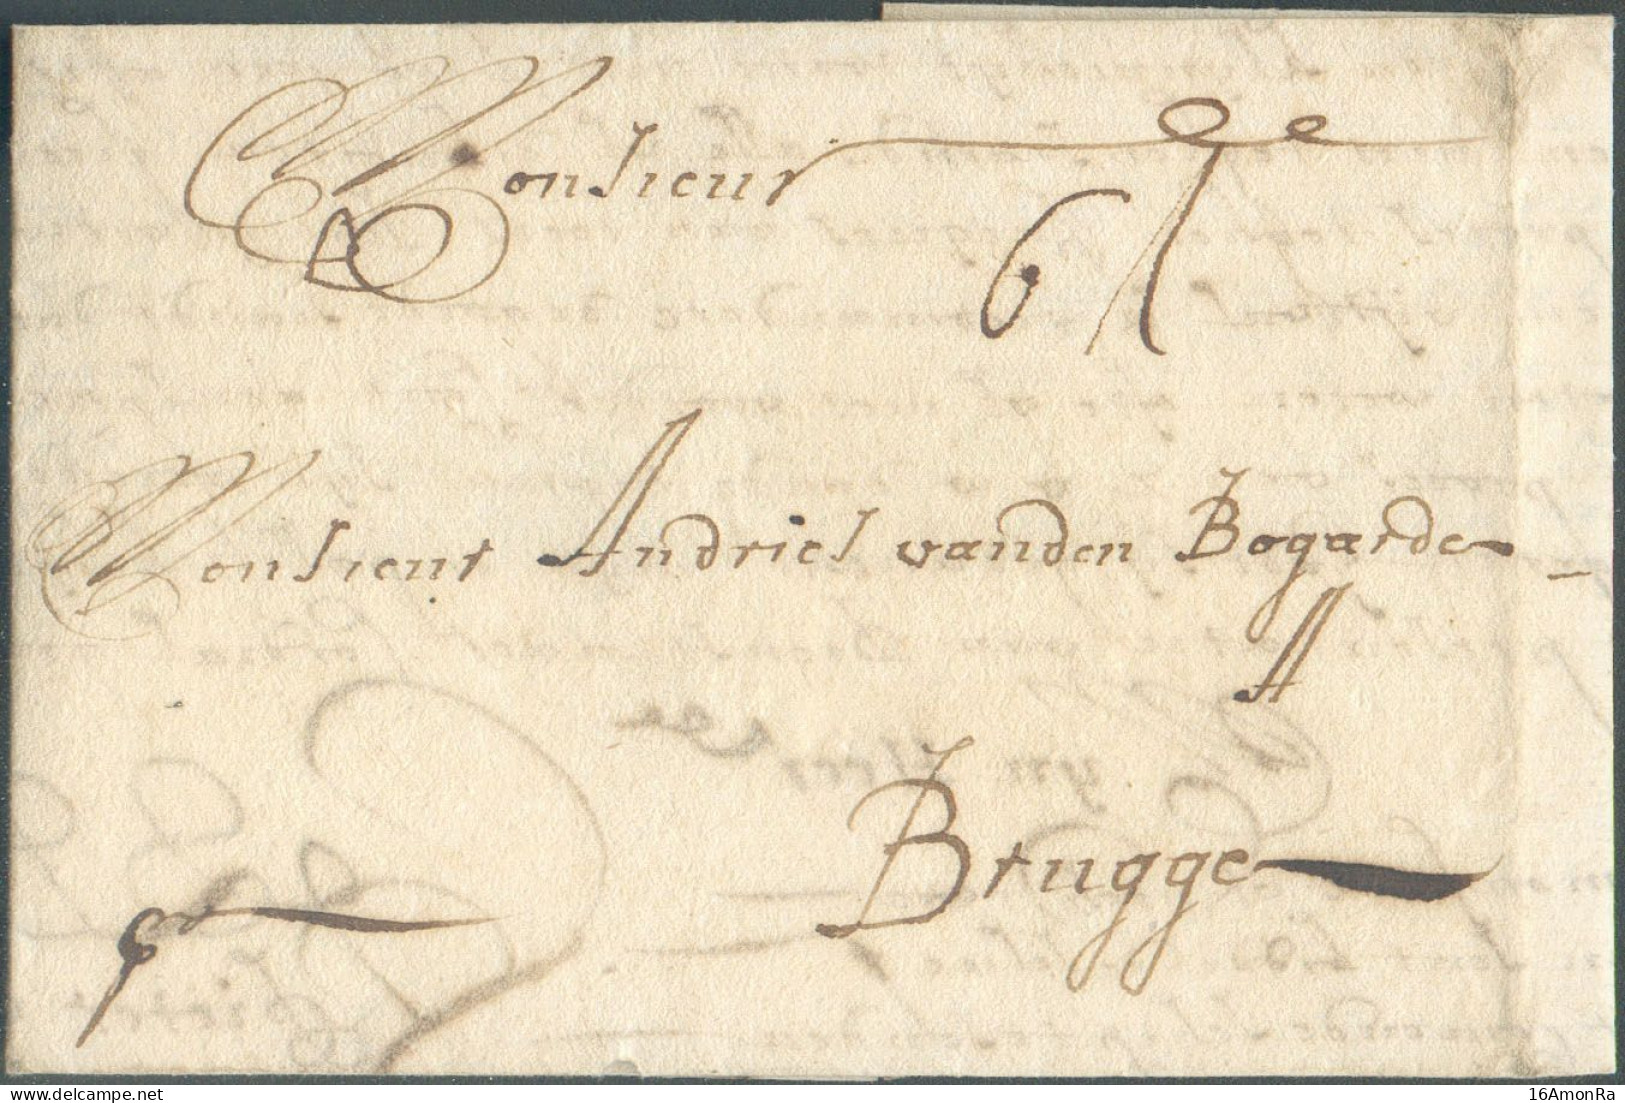 LAC De LONDON Le 23 Octobre 1699 Vers BRUGGE; Port '6' Shillings.  Superbe - 21367 - 1621-1713 (Spanische Niederlande)